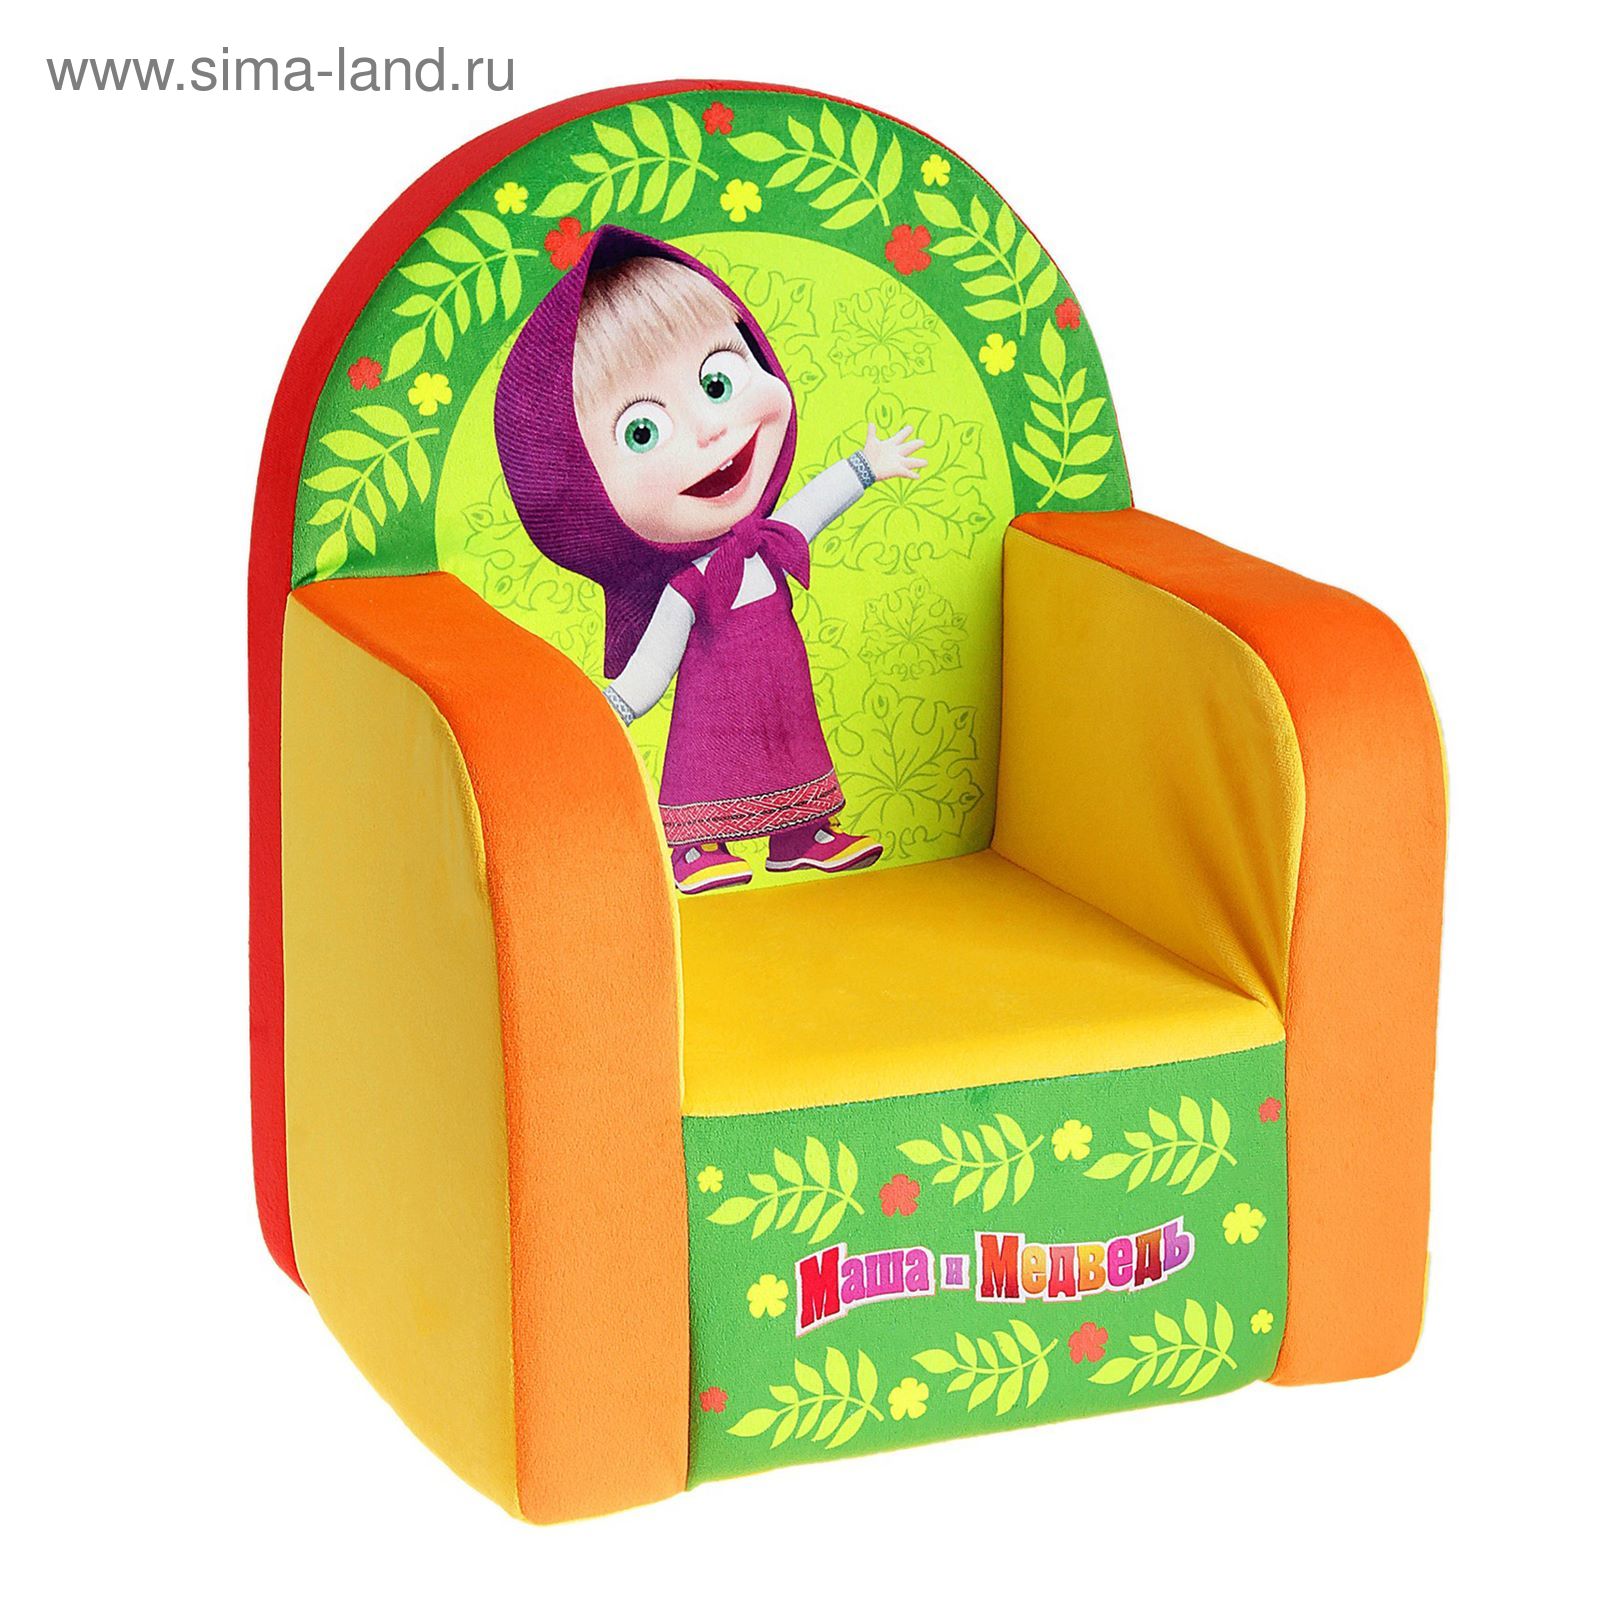 детское кресло сима ленд